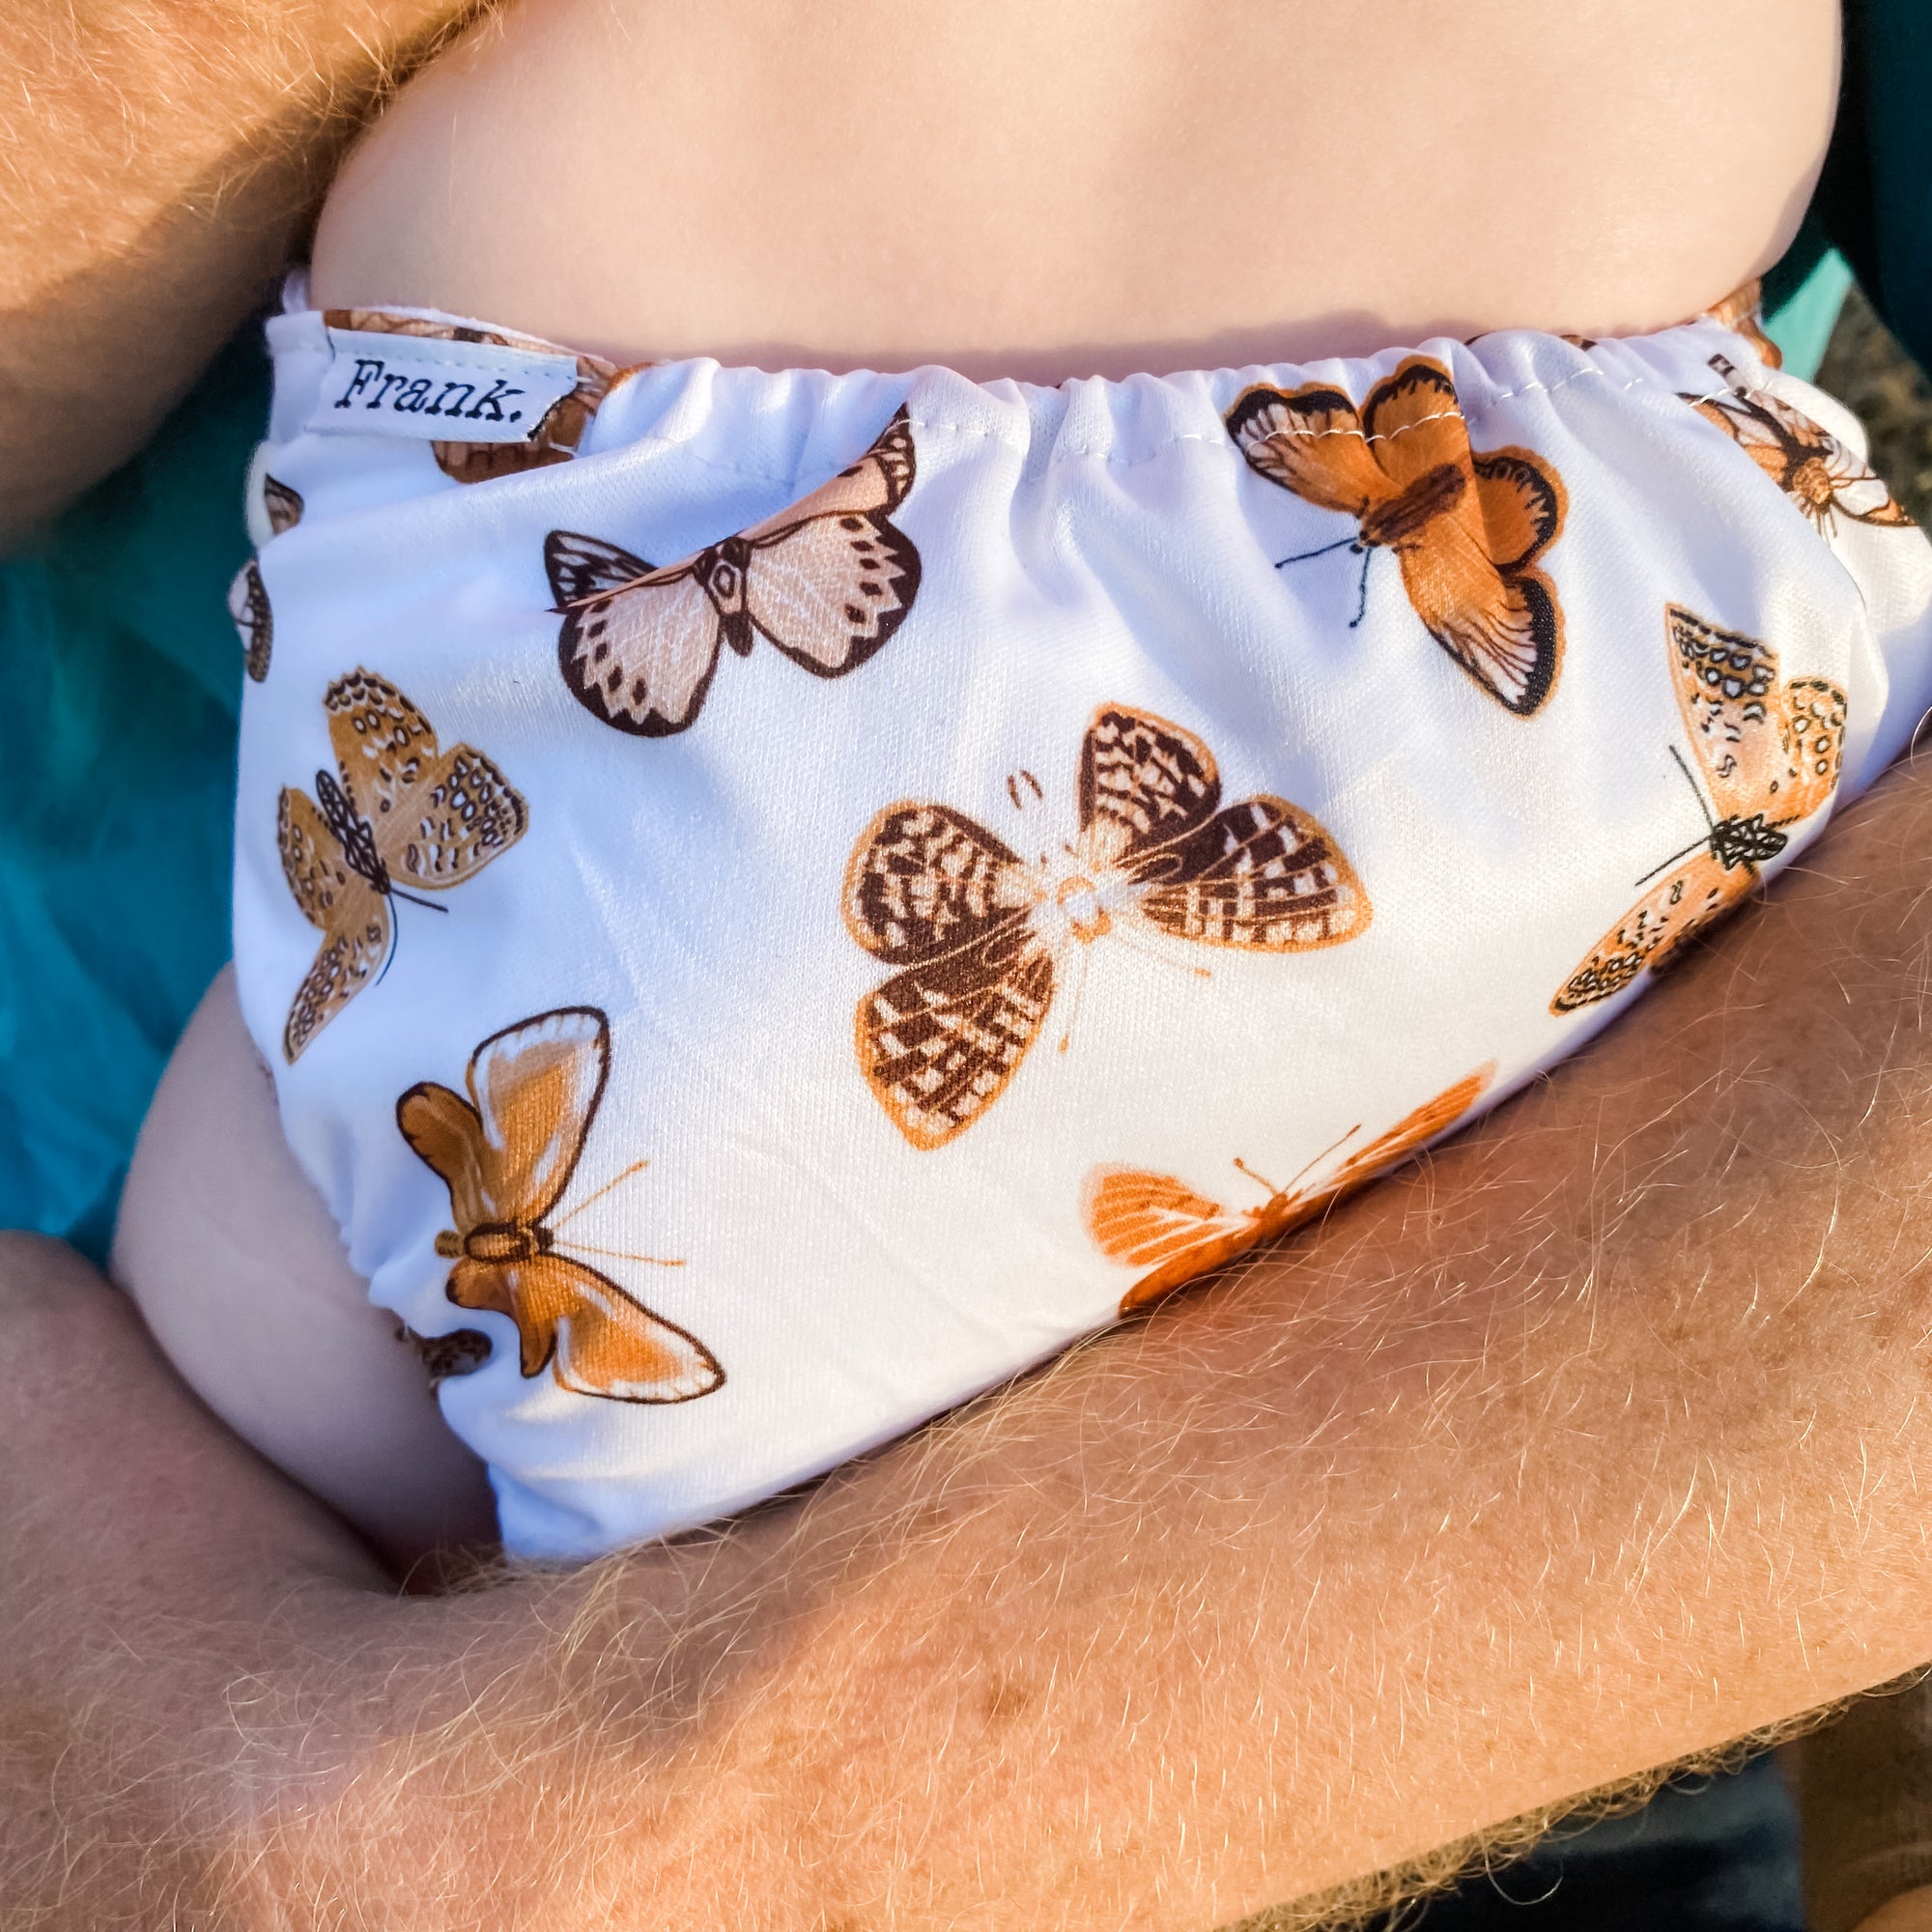 Butterfly moth reusable cloth nappy Australia